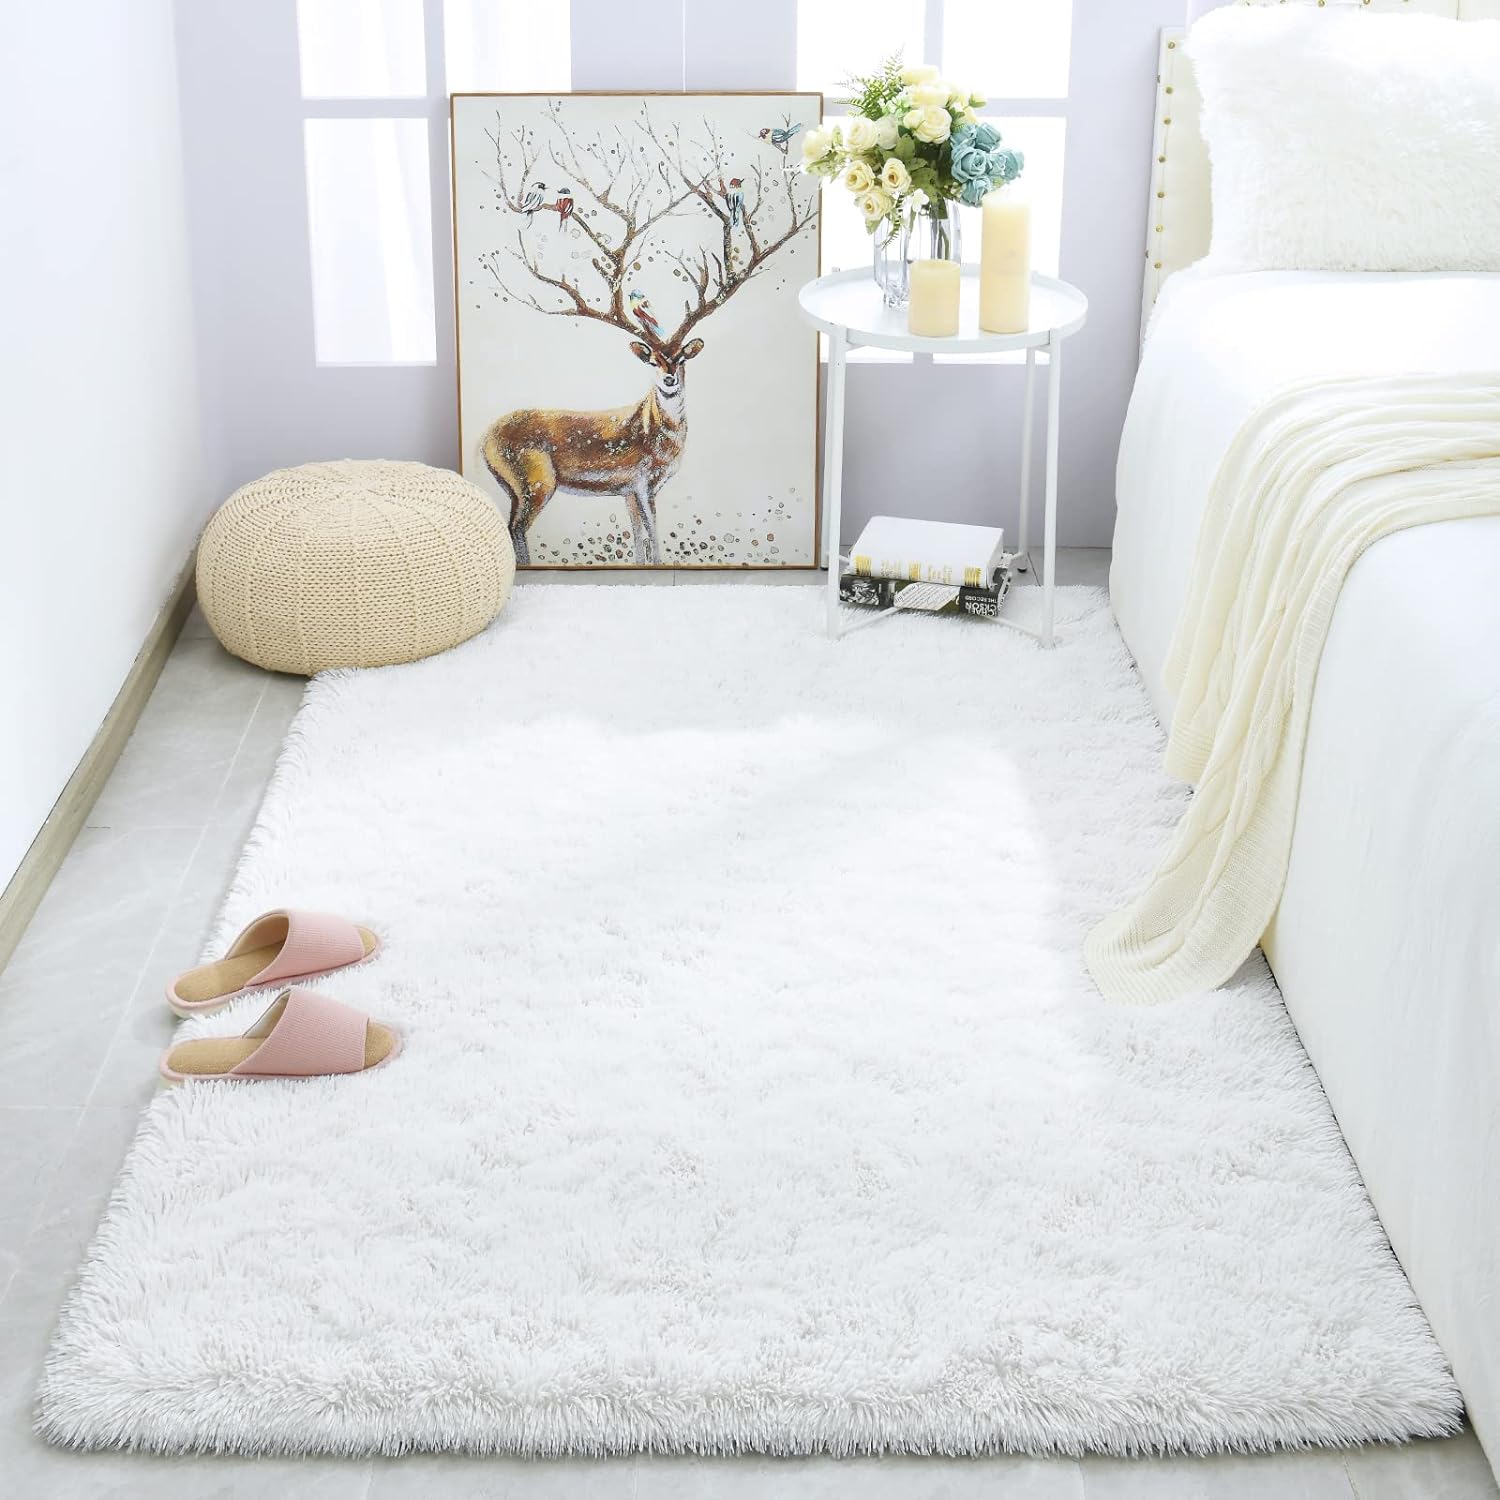 Merelax Soft Modern Indoor Shaggy Area Rug for Bedroom Livingroom Dorm Kids Room Home Decorative, Non-Slip Plush Fluffy Furry Fur Rugs Comfy Nursery Accent Floor Carpet 3x5 Feet, White